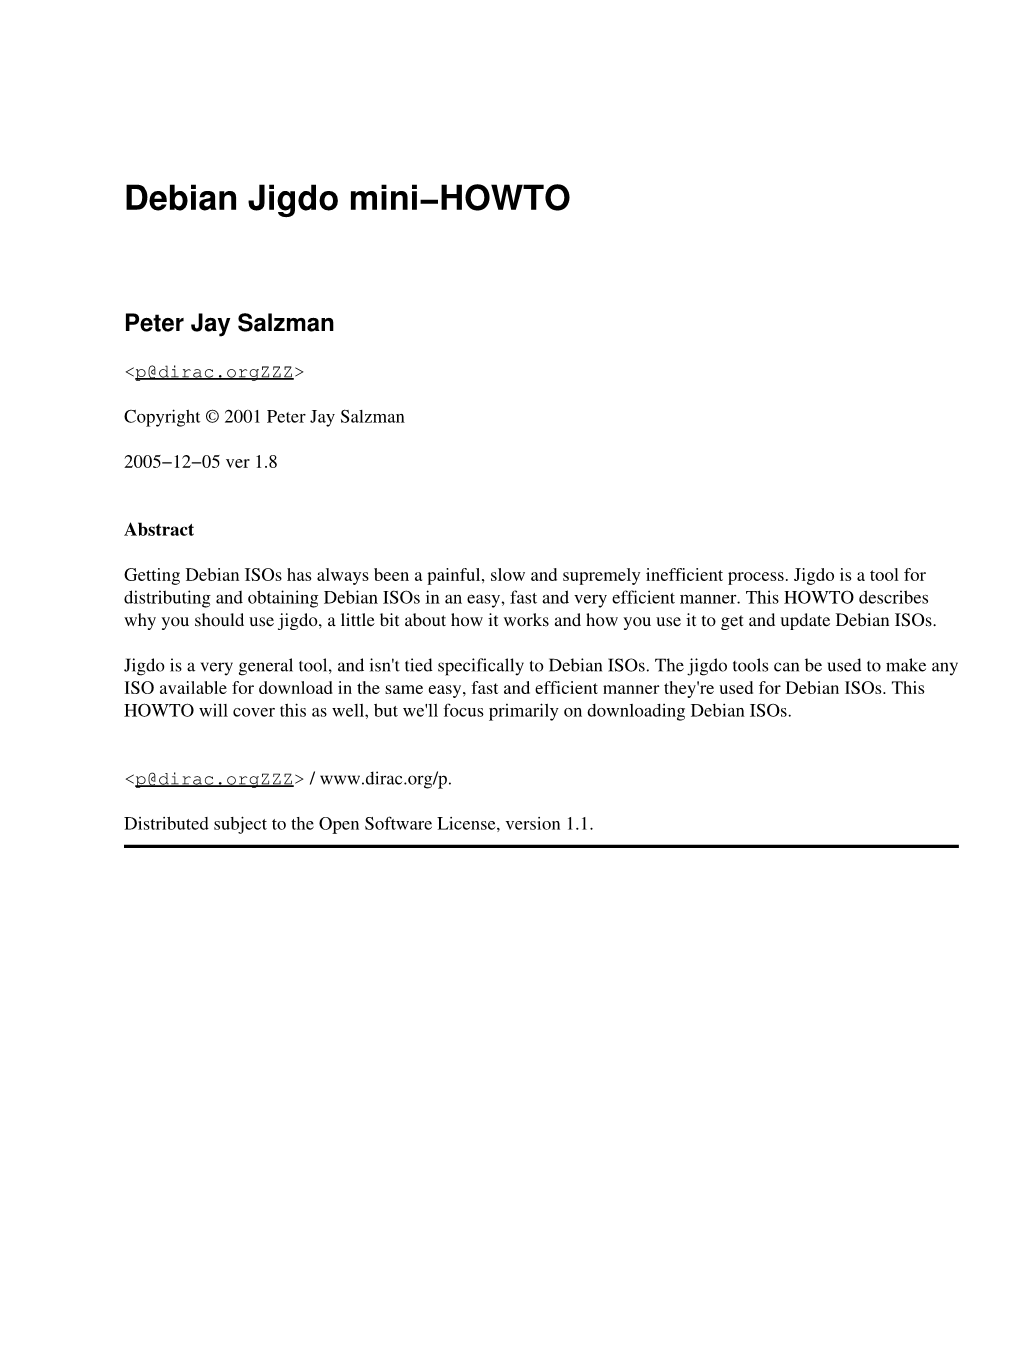 Debian Jigdo Mini-HOWTO